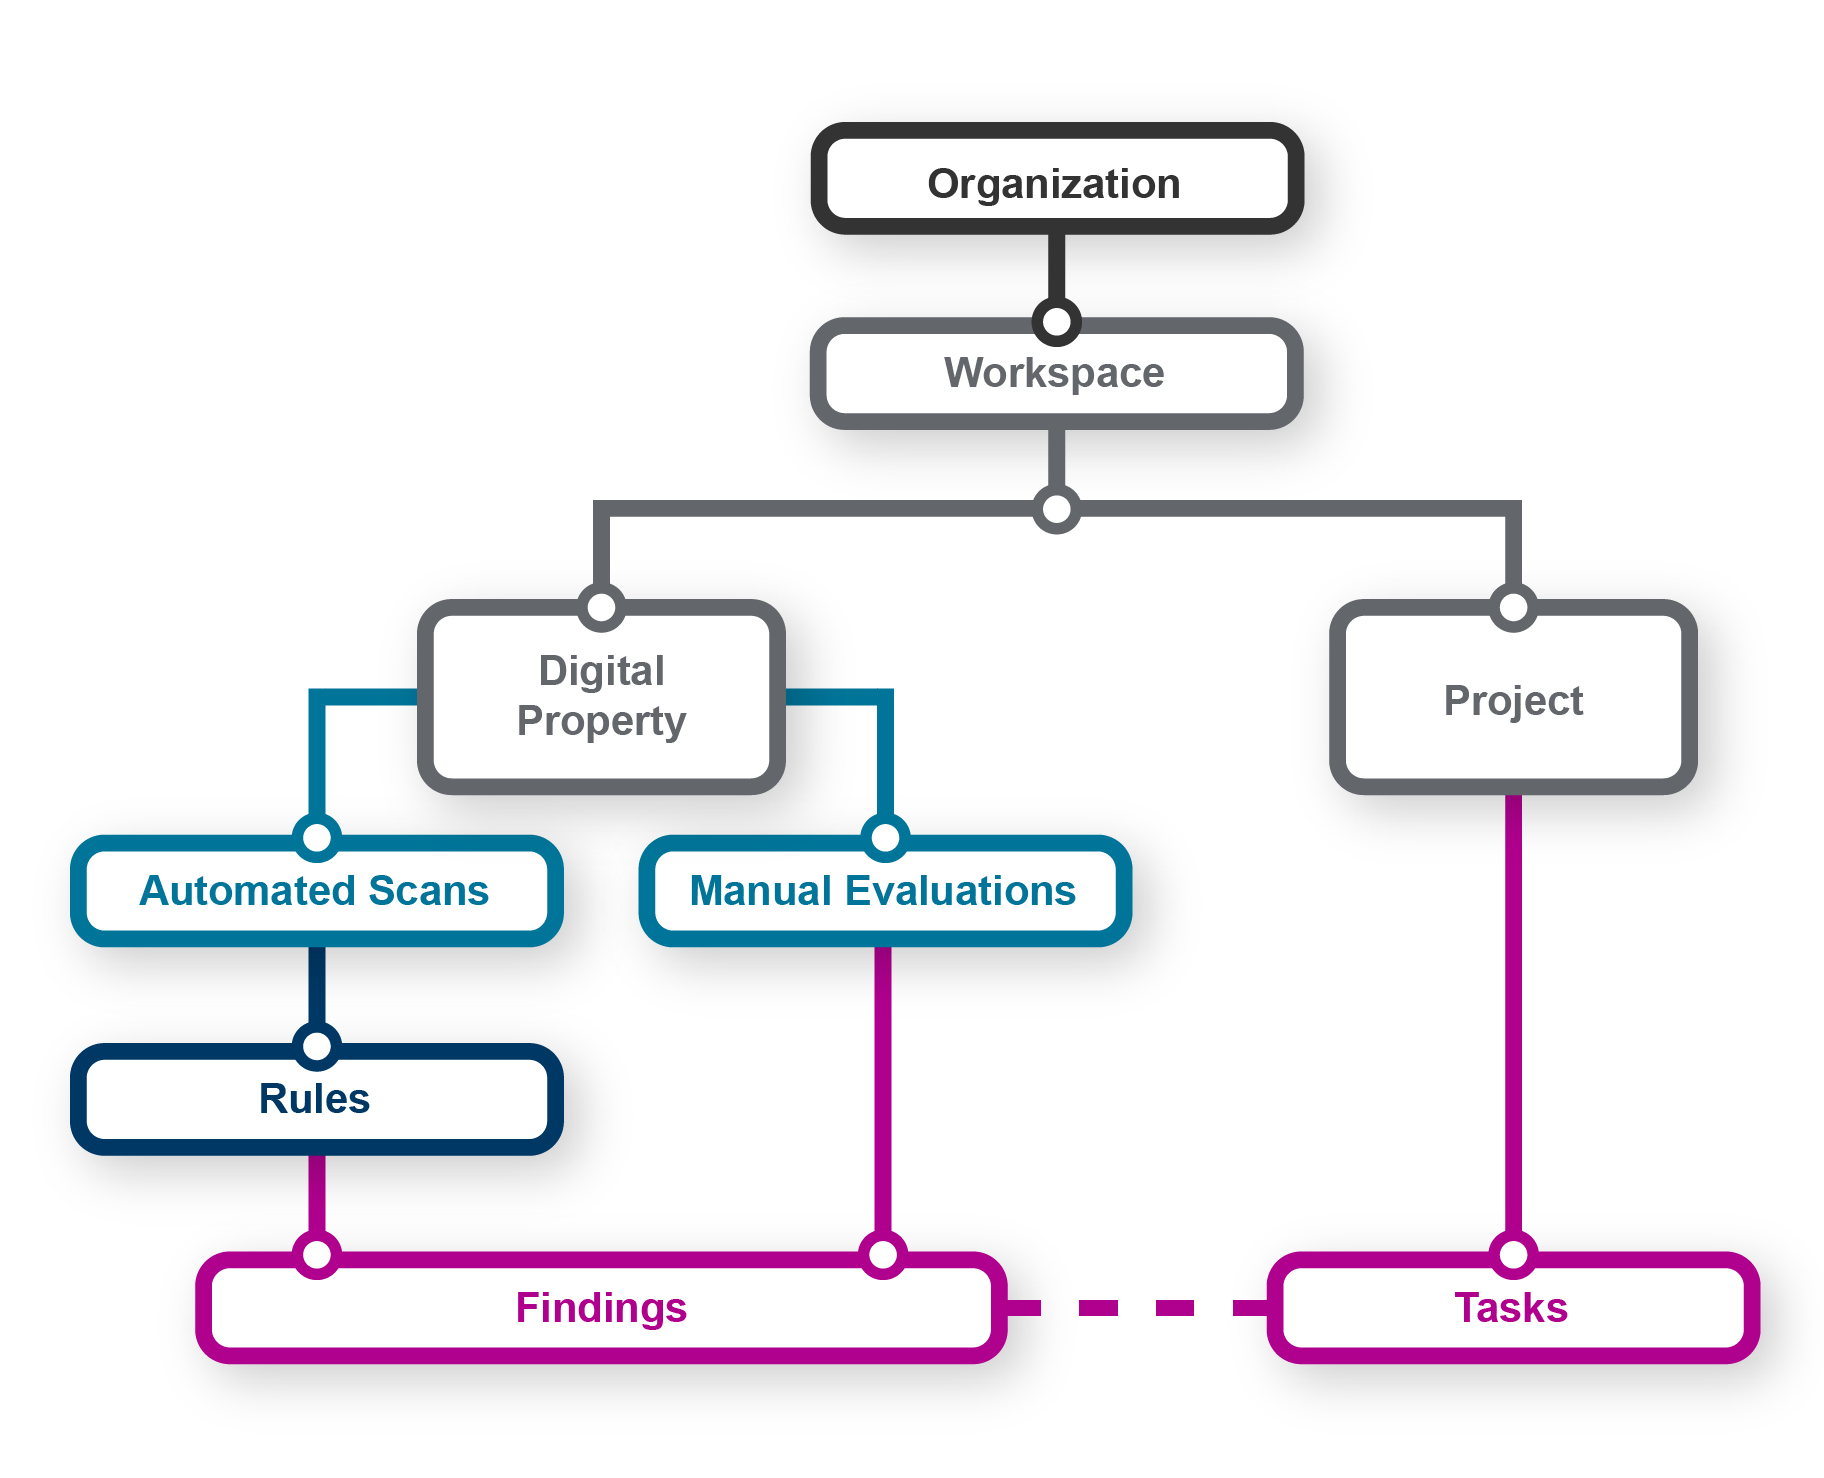 Diagram of the platform organizational hierachy.